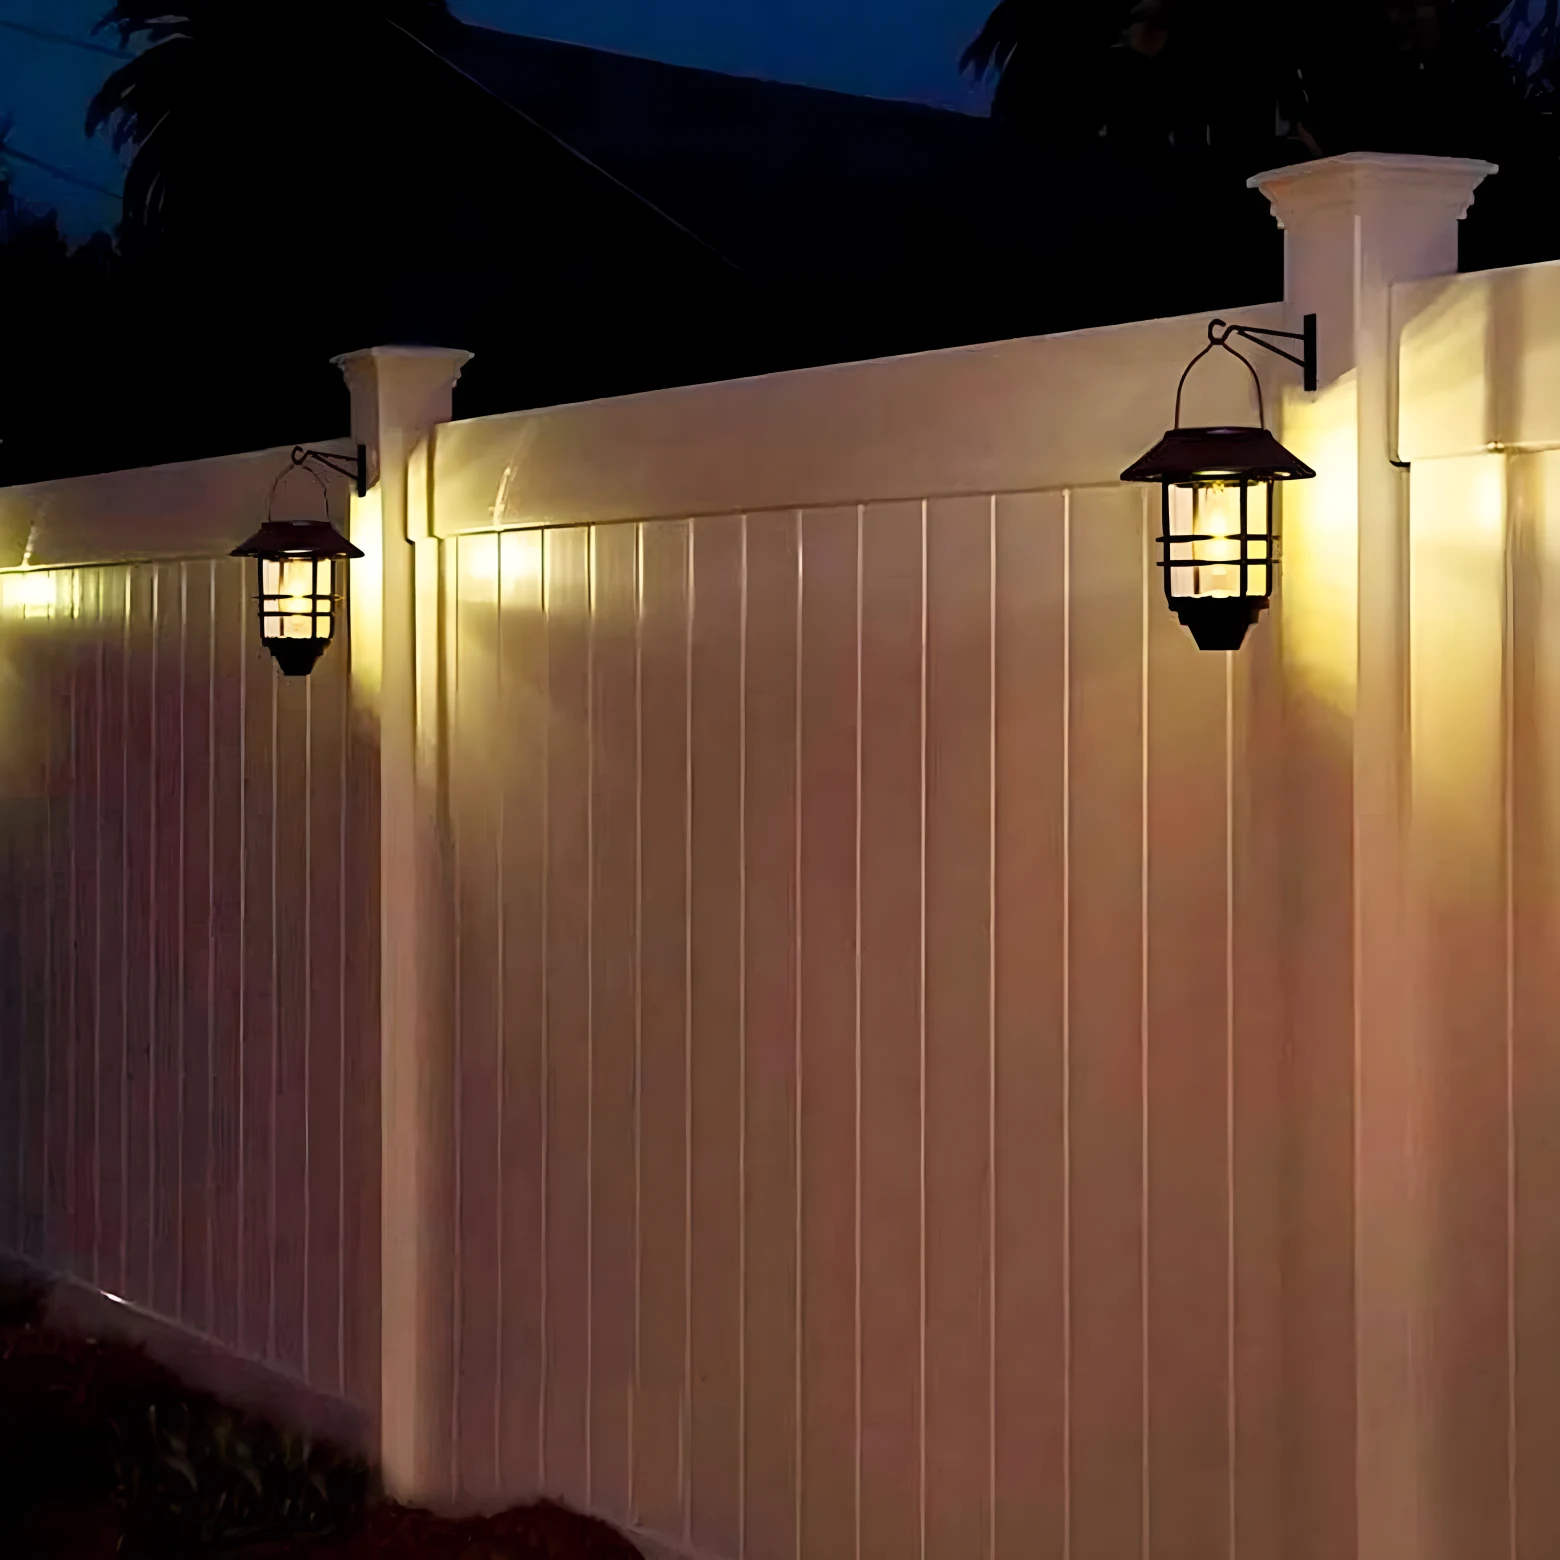 6 Outdoor Fence Lighting Ideas - Fence Lanterns